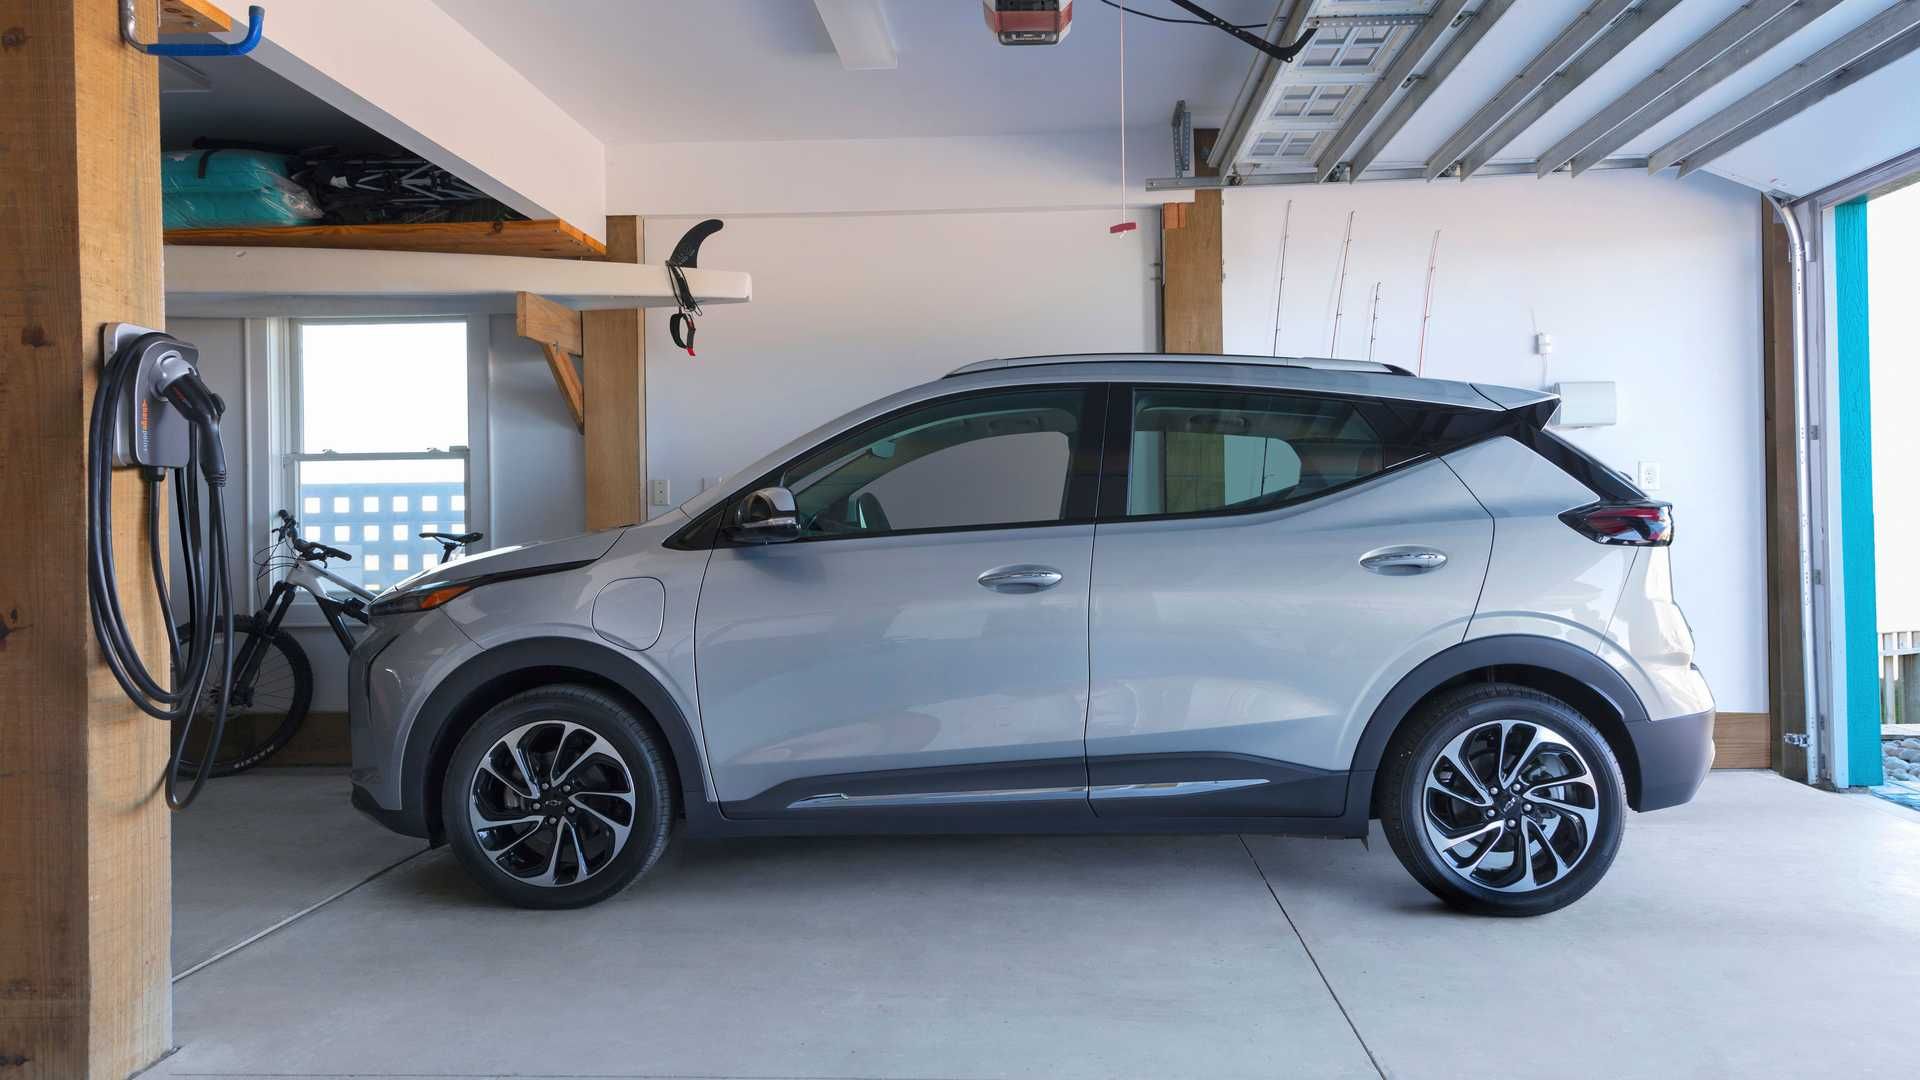 2022 Chevrolet Bolt EUV Charging